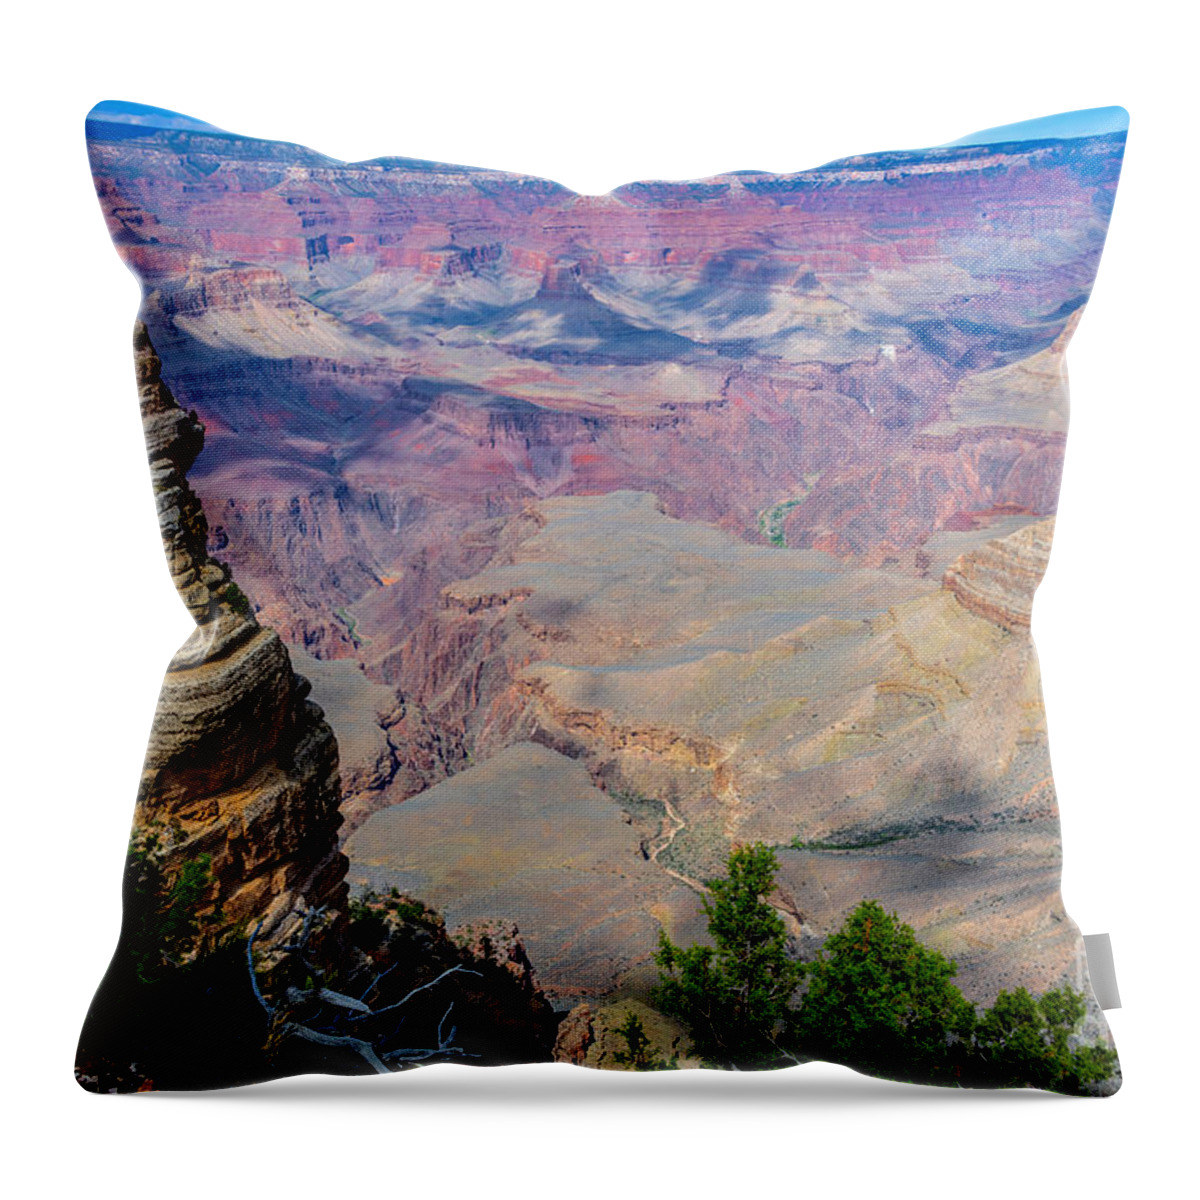 The Grand Canyon South Rim Throw Pillow featuring the digital art The Grand Canyon South Rim by Tammy Keyes